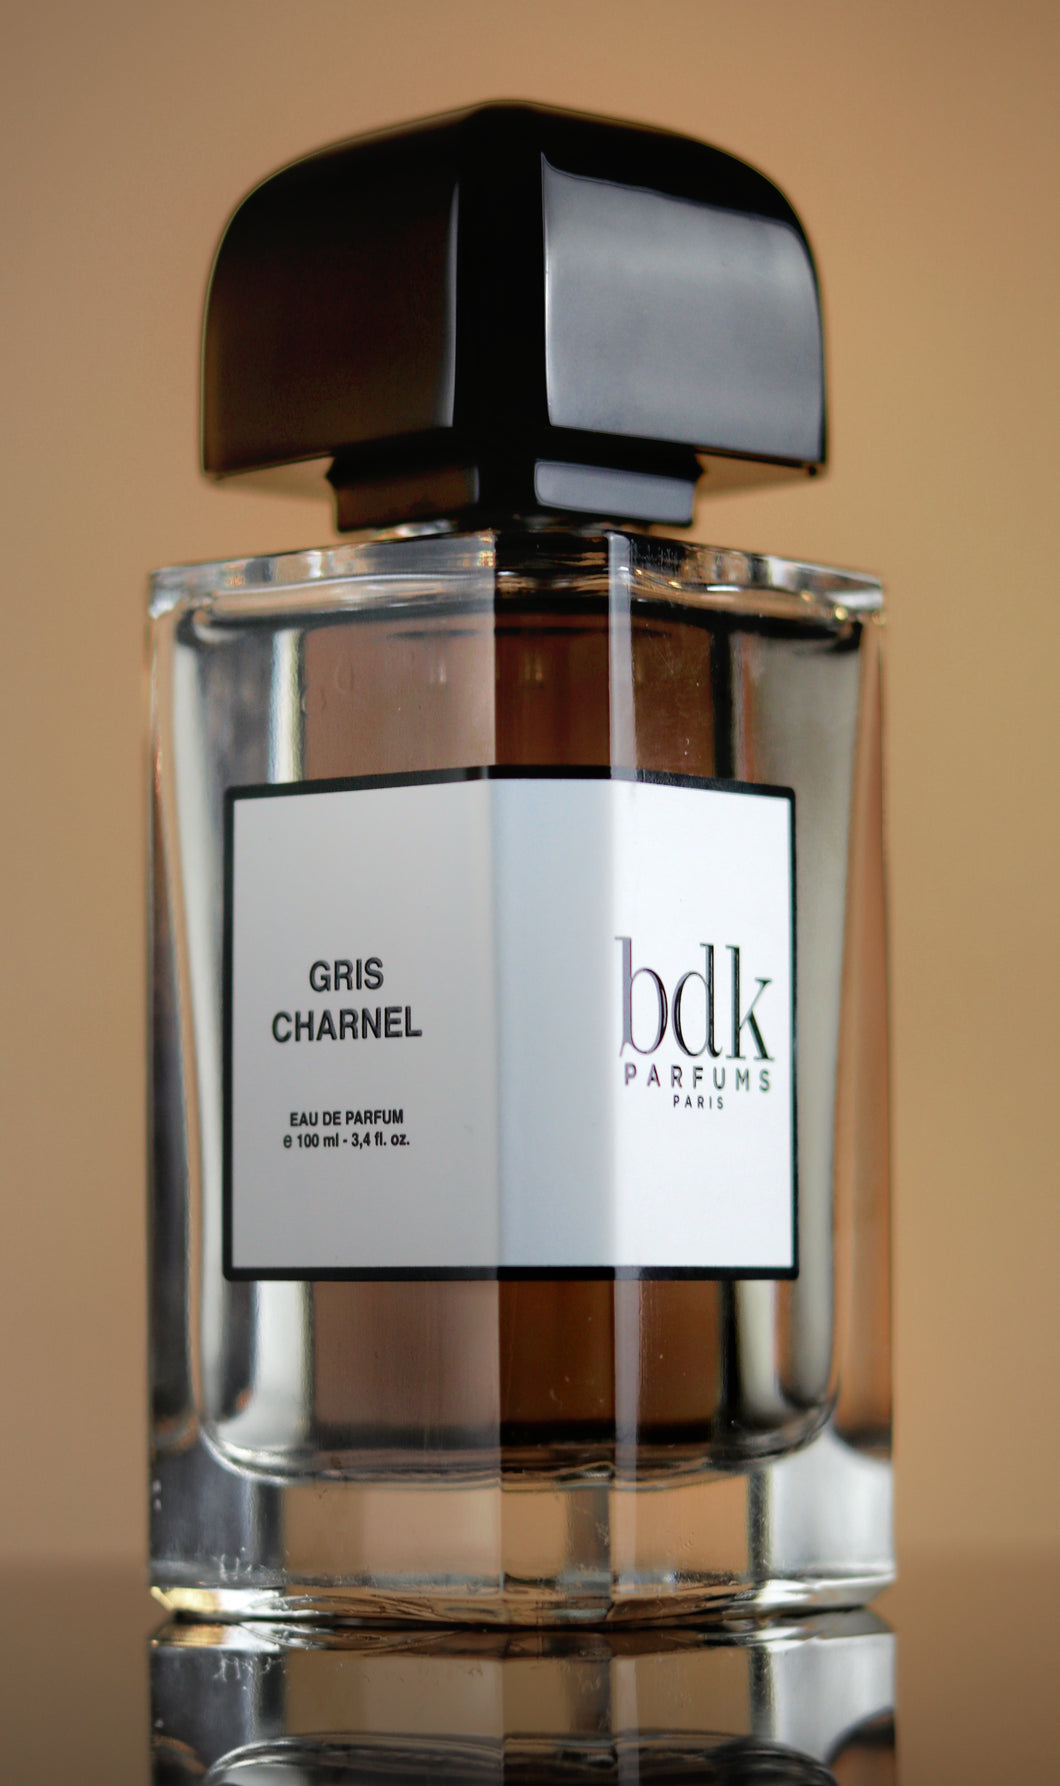 chanel perfume bdk